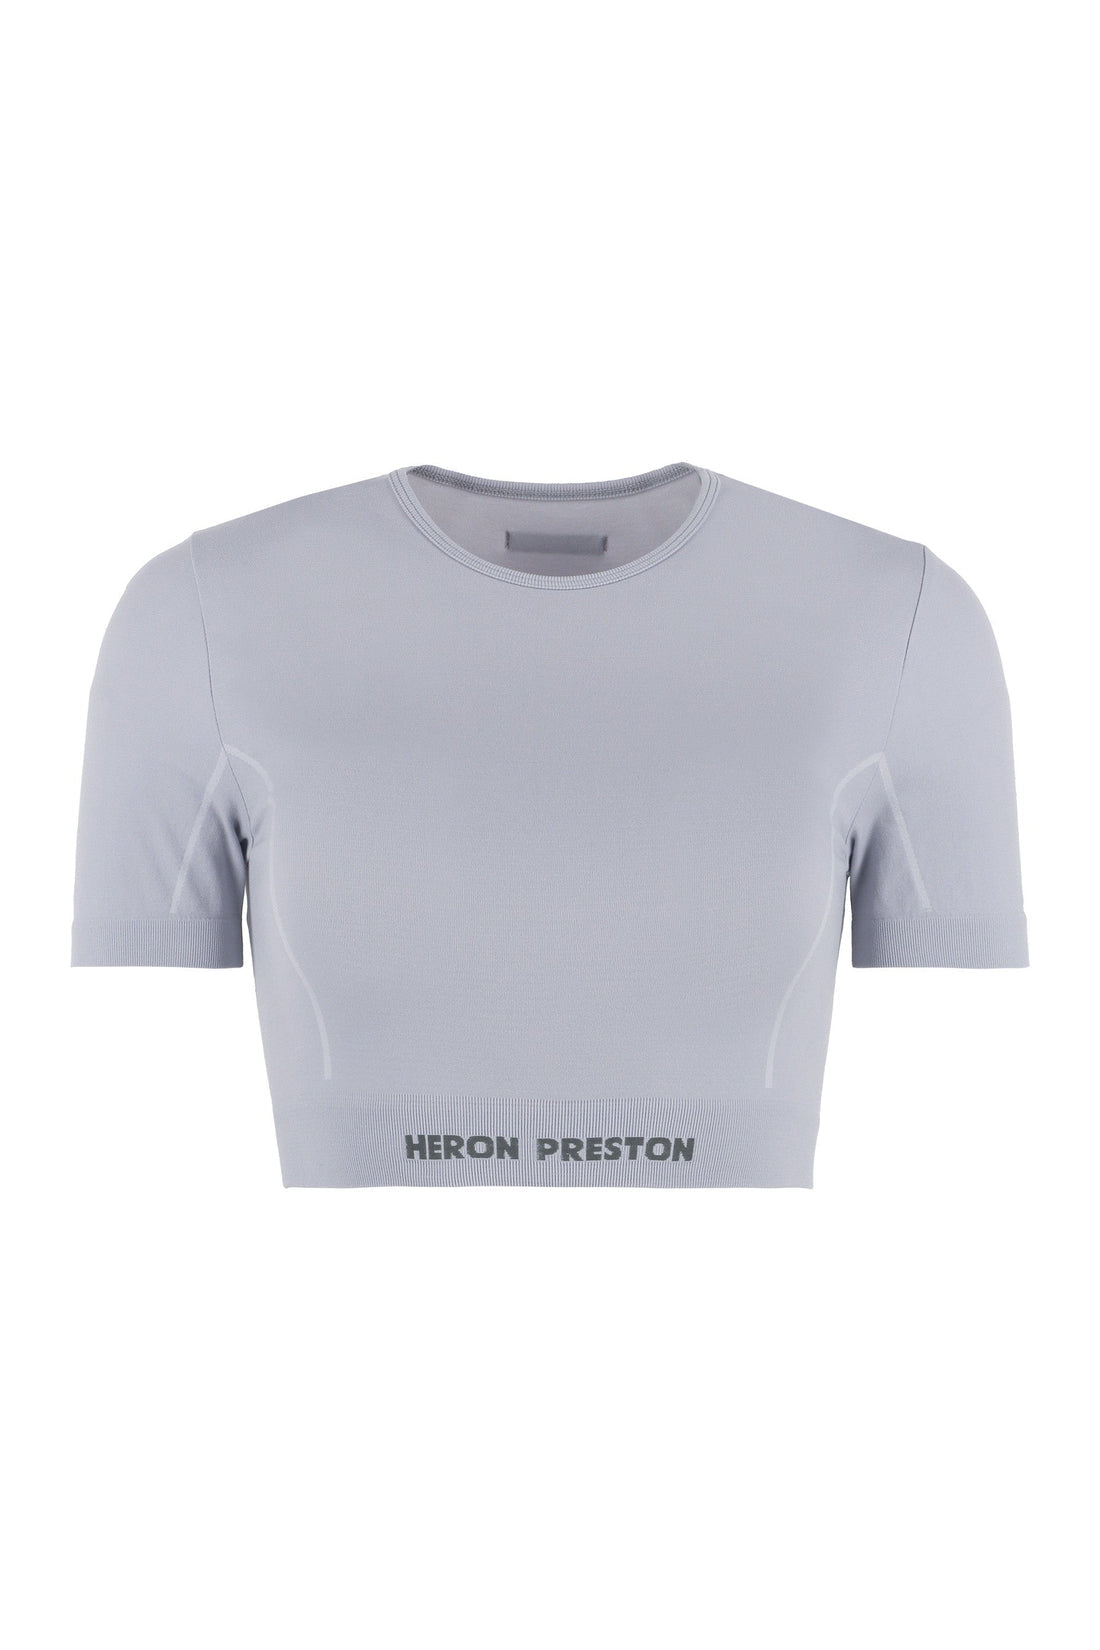 Heron Preston-OUTLET-SALE-Active technical fabric crop top-ARCHIVIST